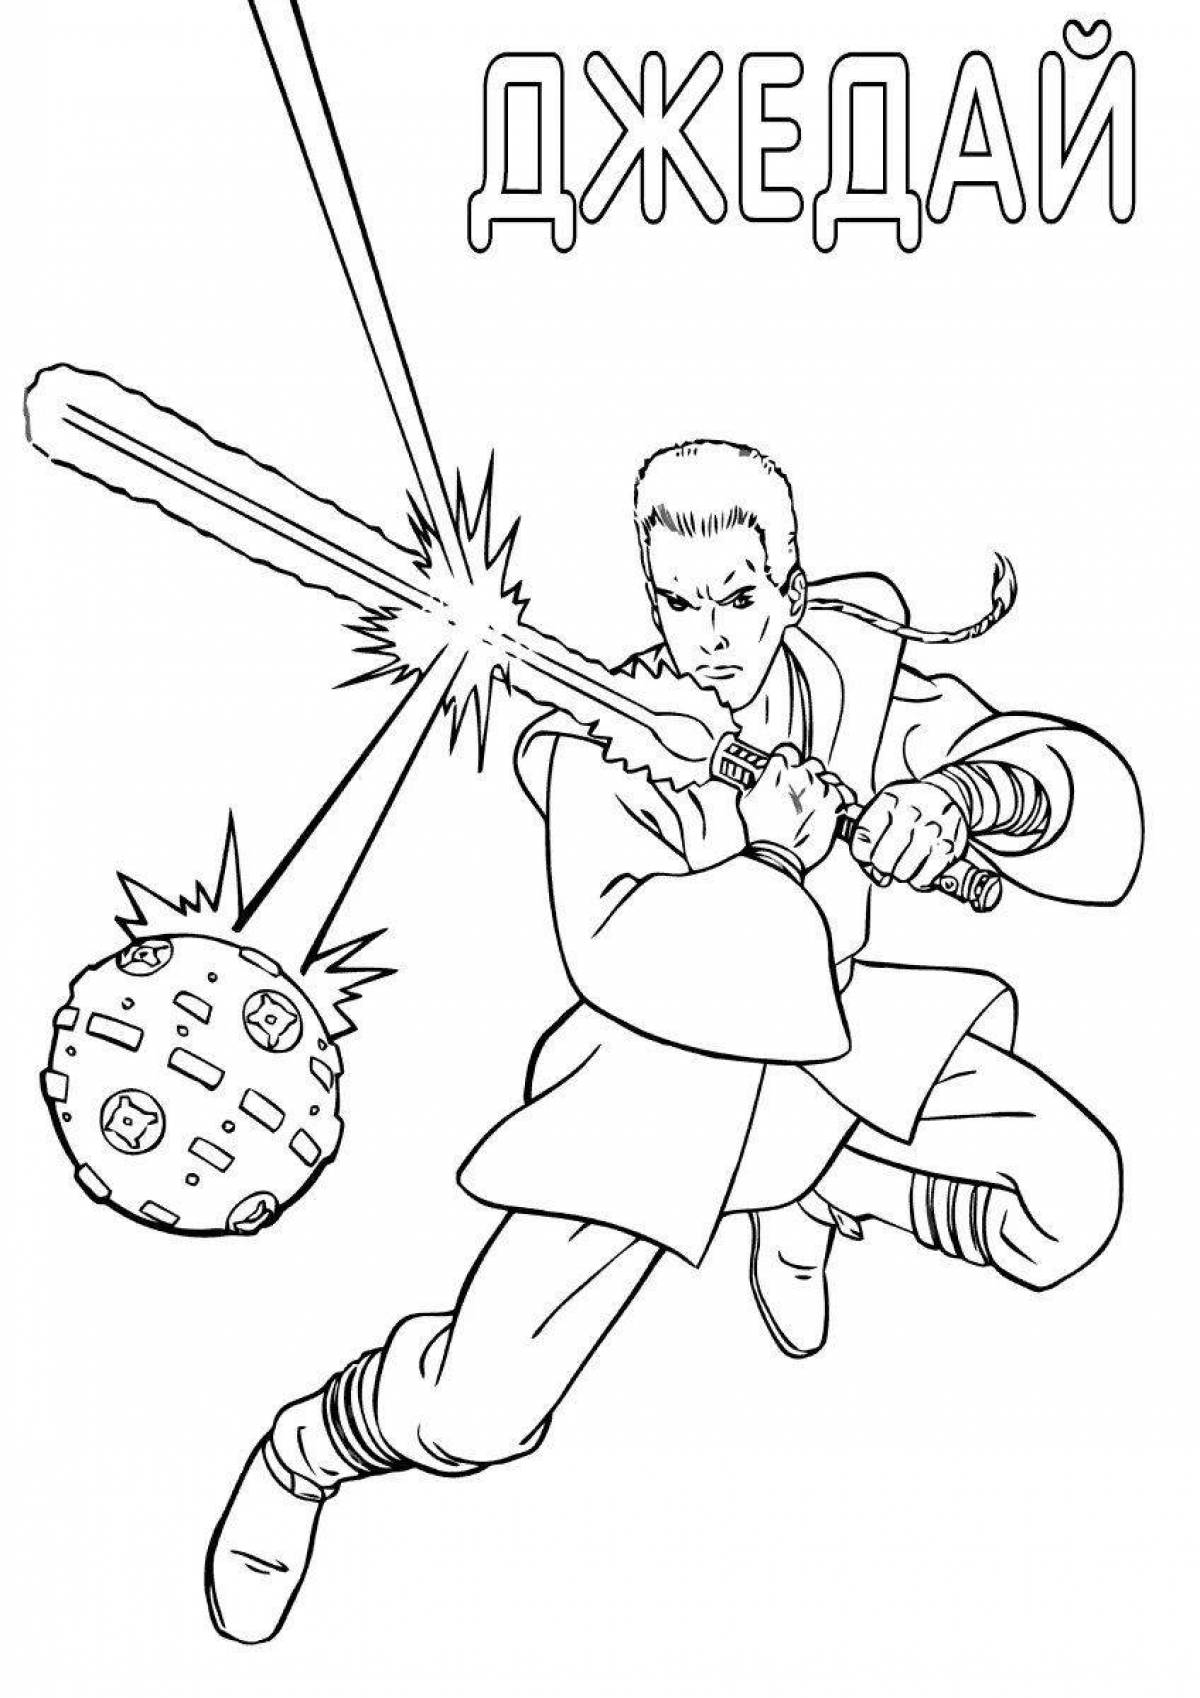 Joyful laser sword coloring page